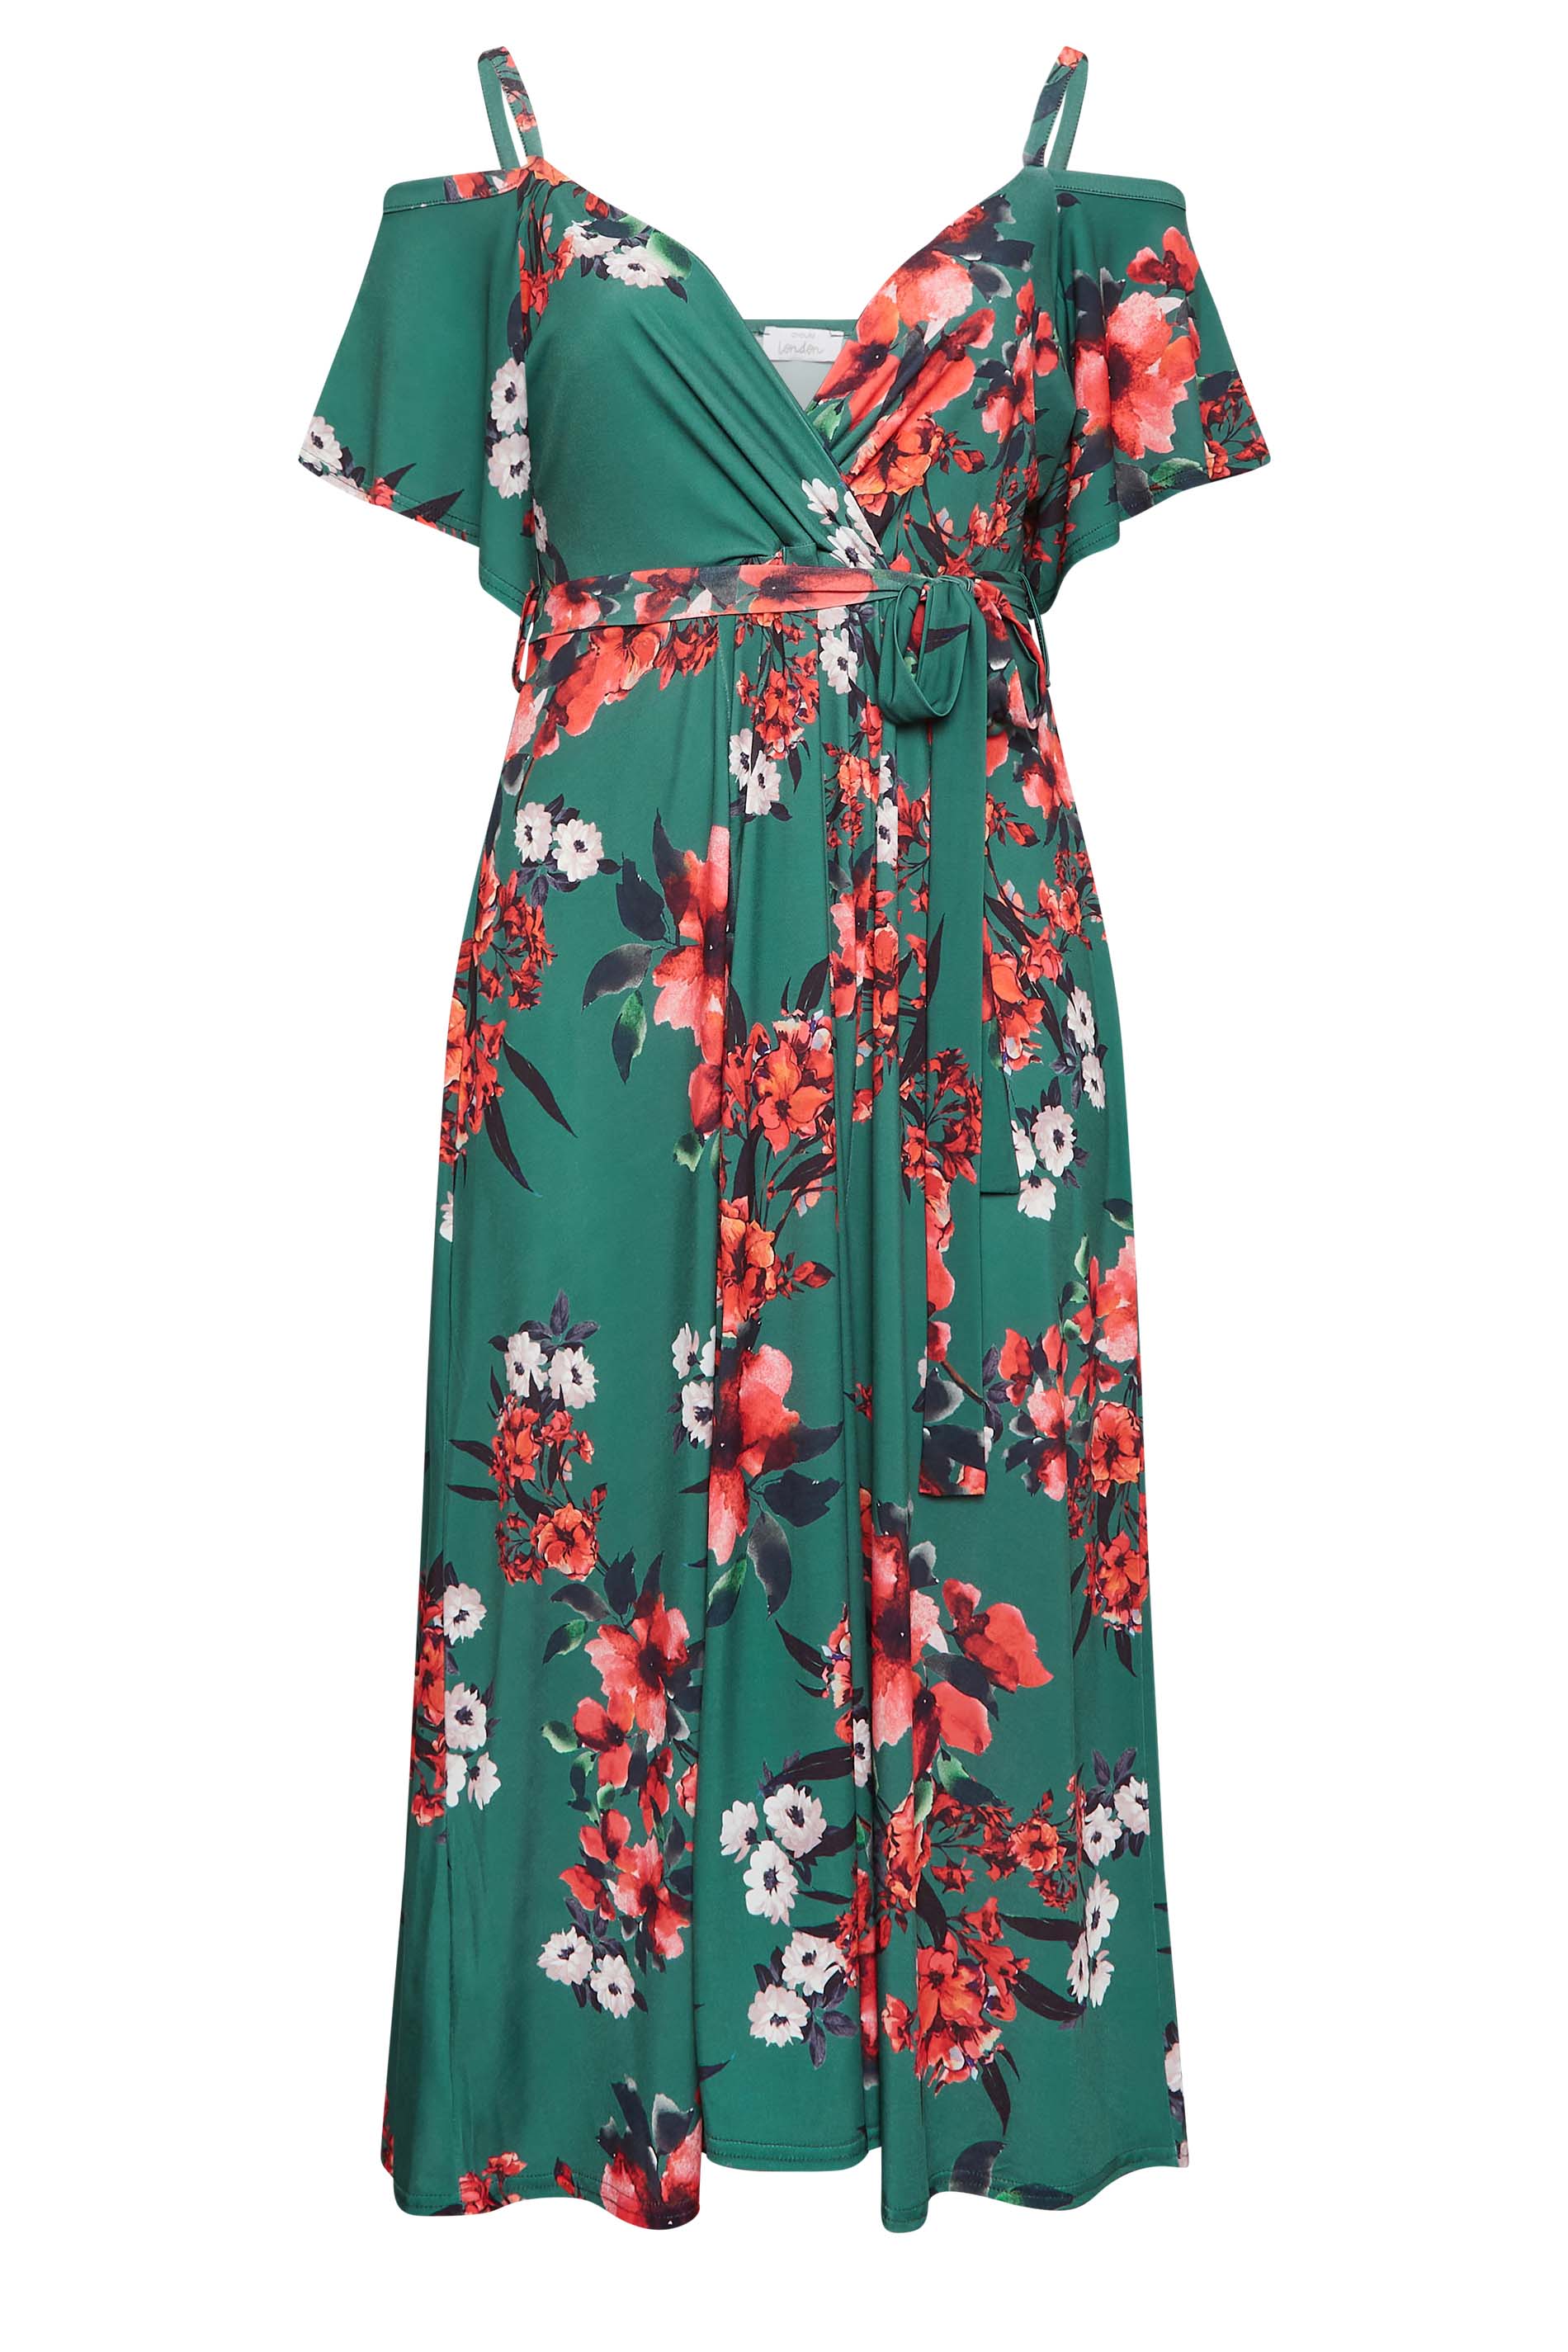 YOURS LONDON Plus Size Green Floral Cold Shoulder Wrap Dress | Yours ...